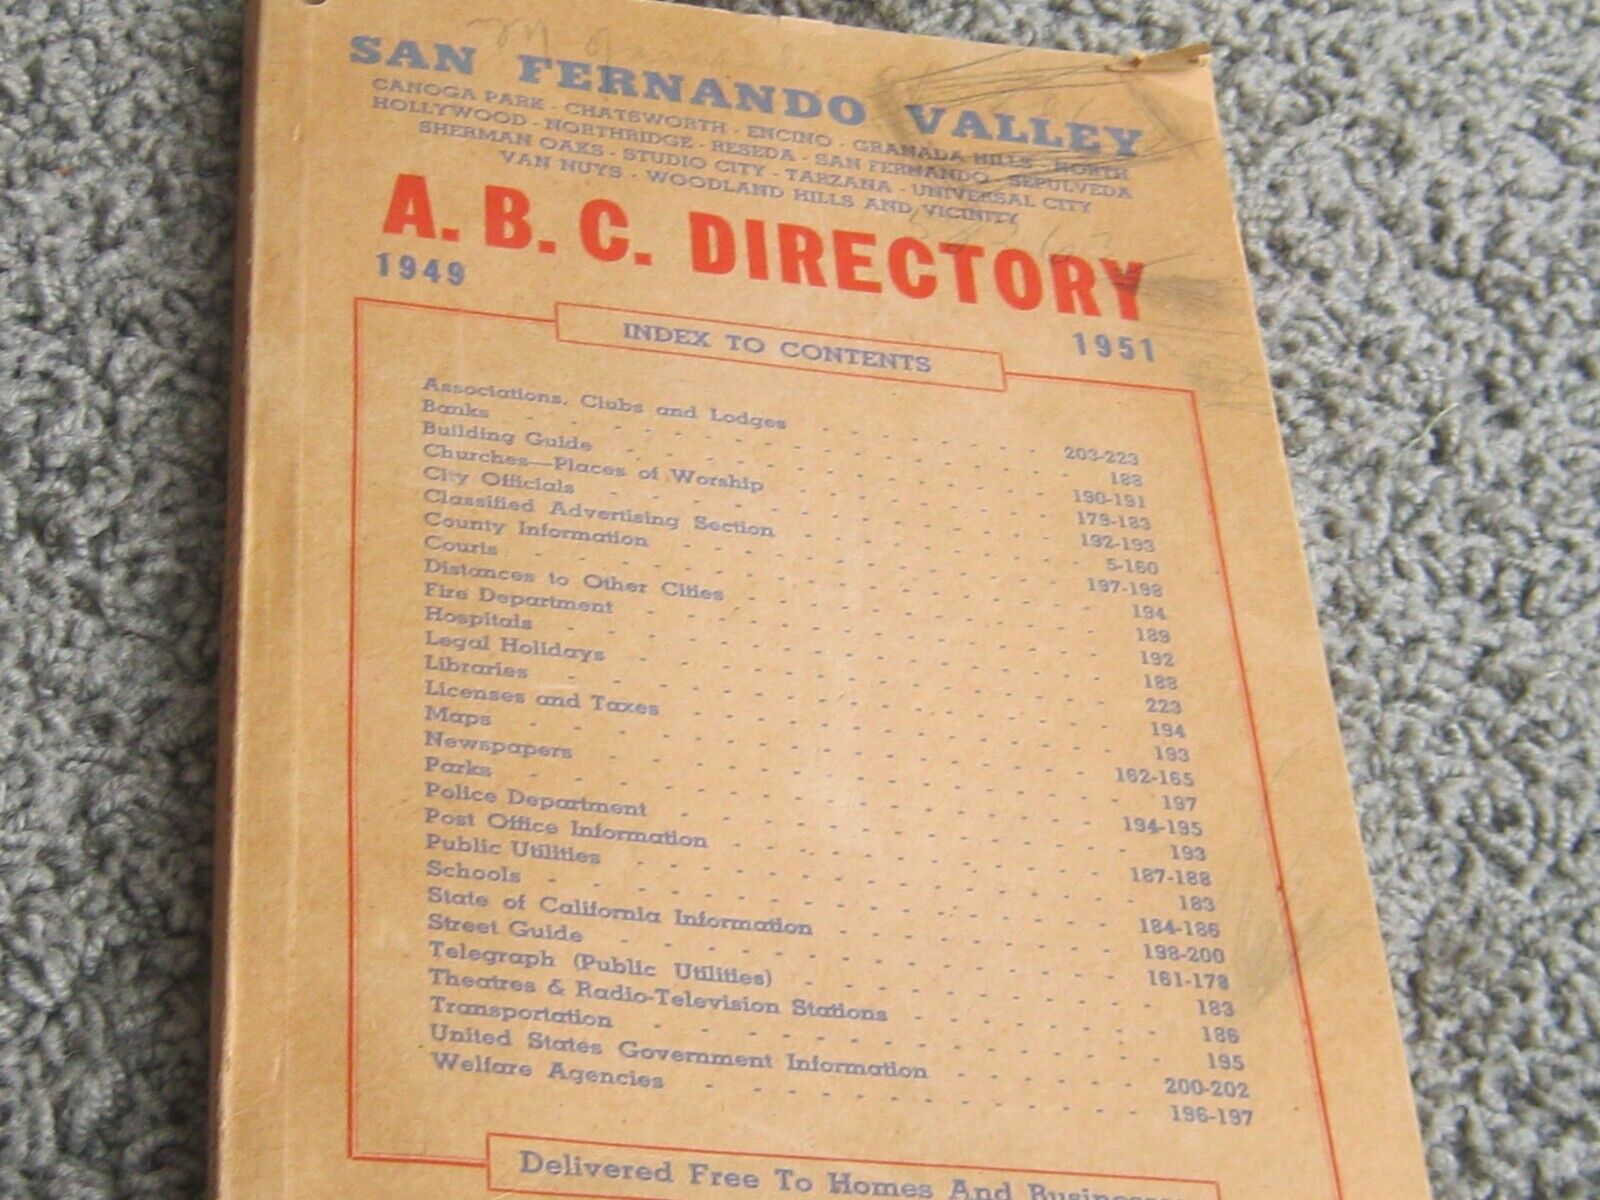 SAN FERNANDO VALLEY & VICINITY A.B.C. DIRECTORY 1949-1951. April 1949 issue